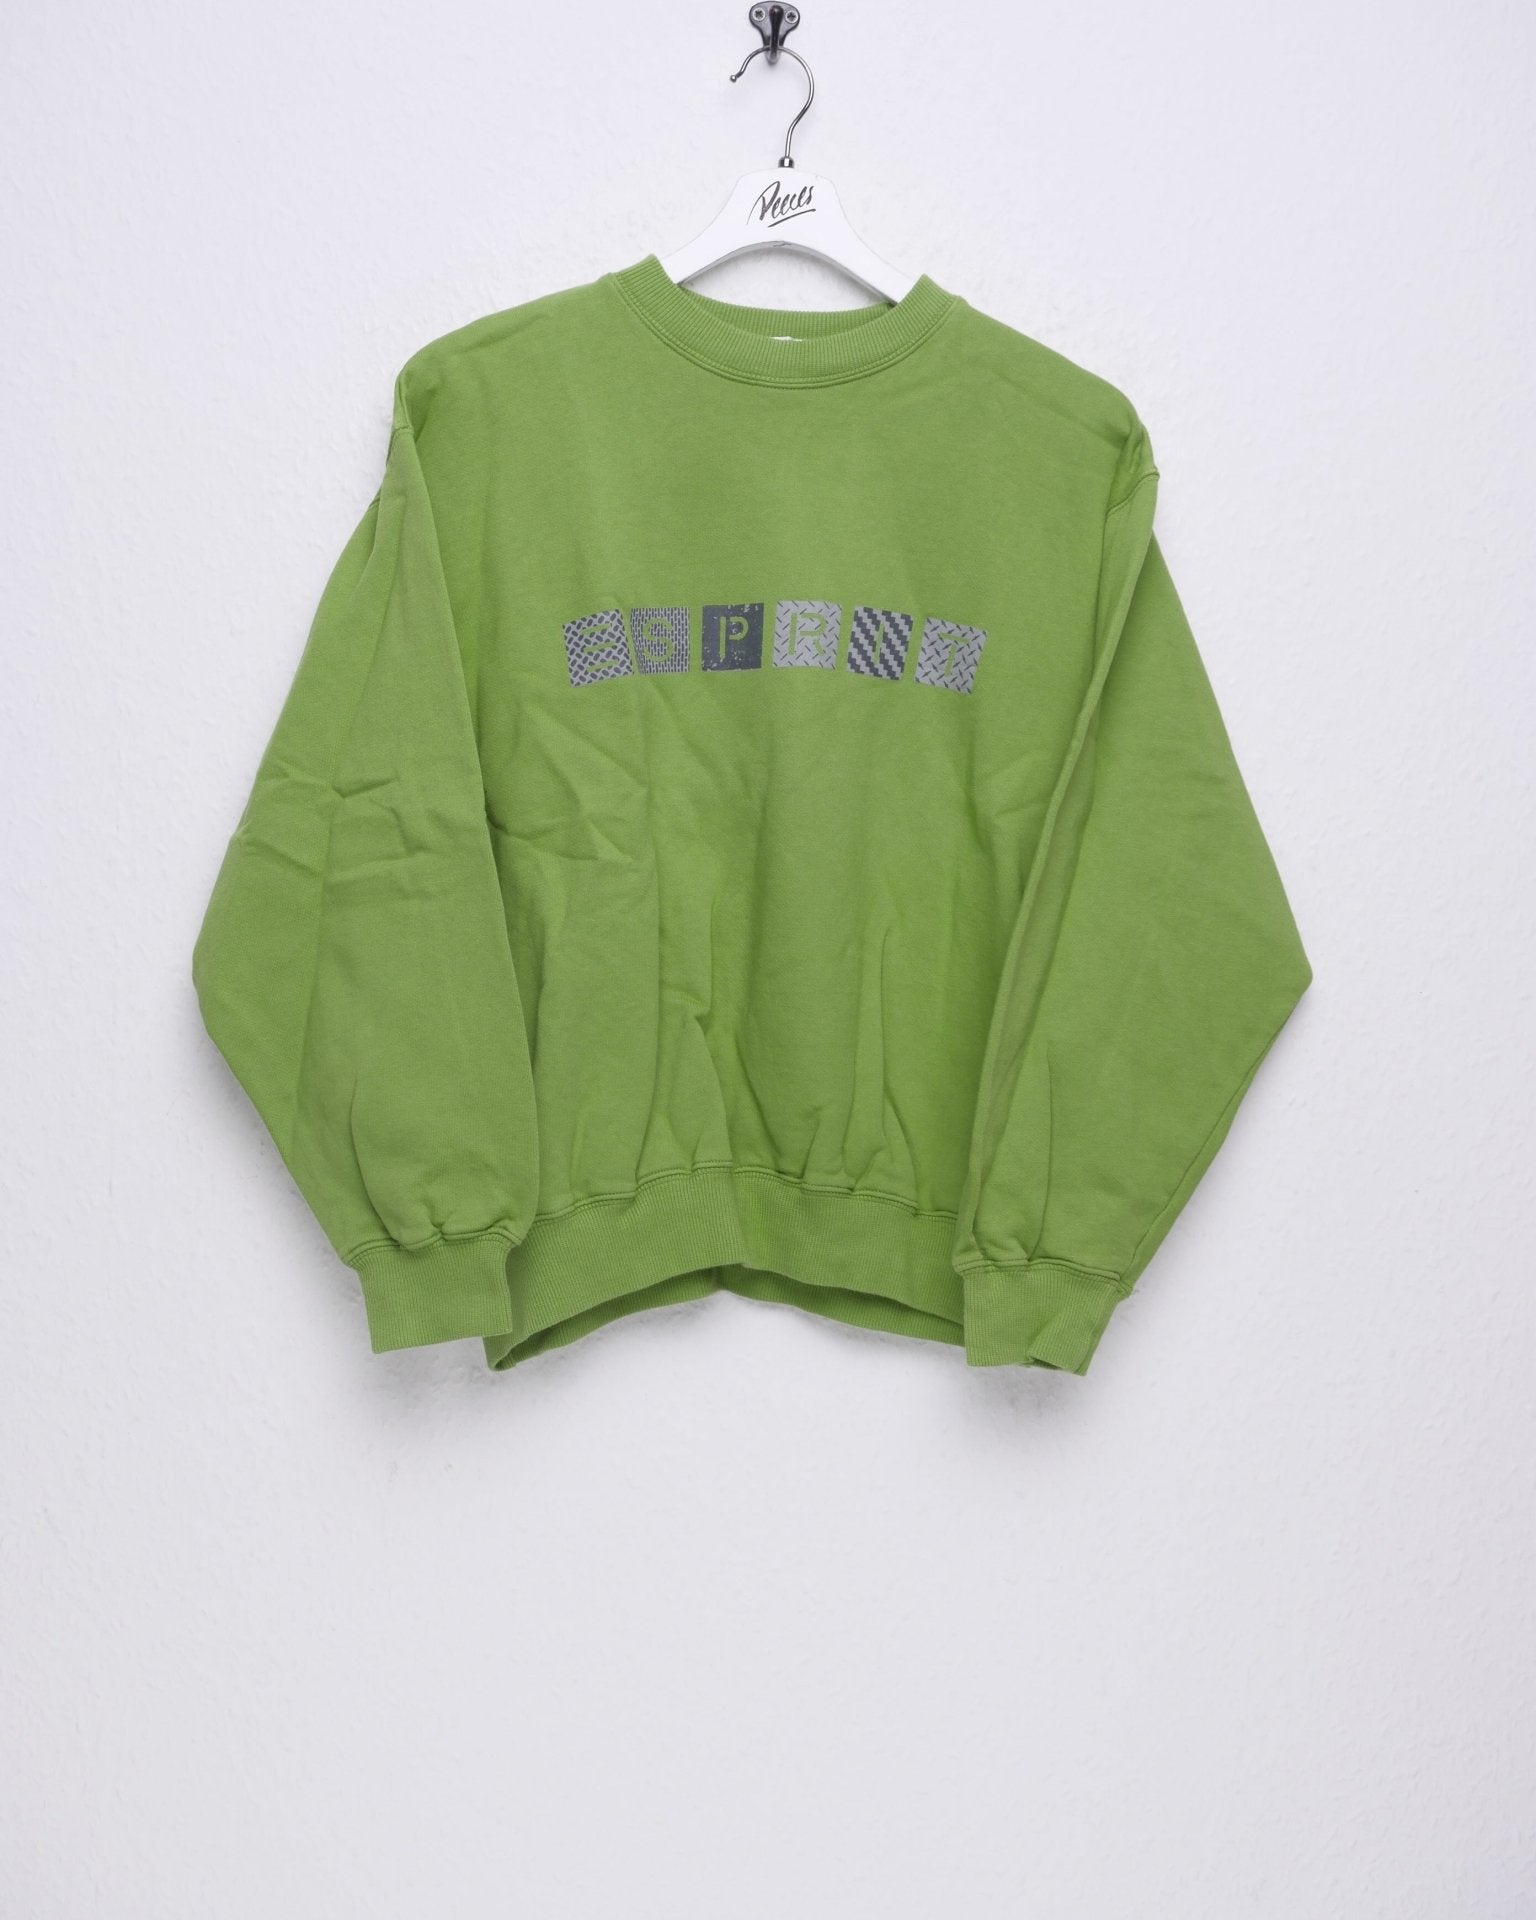 Esprit printed Logo green Sweater - Peeces